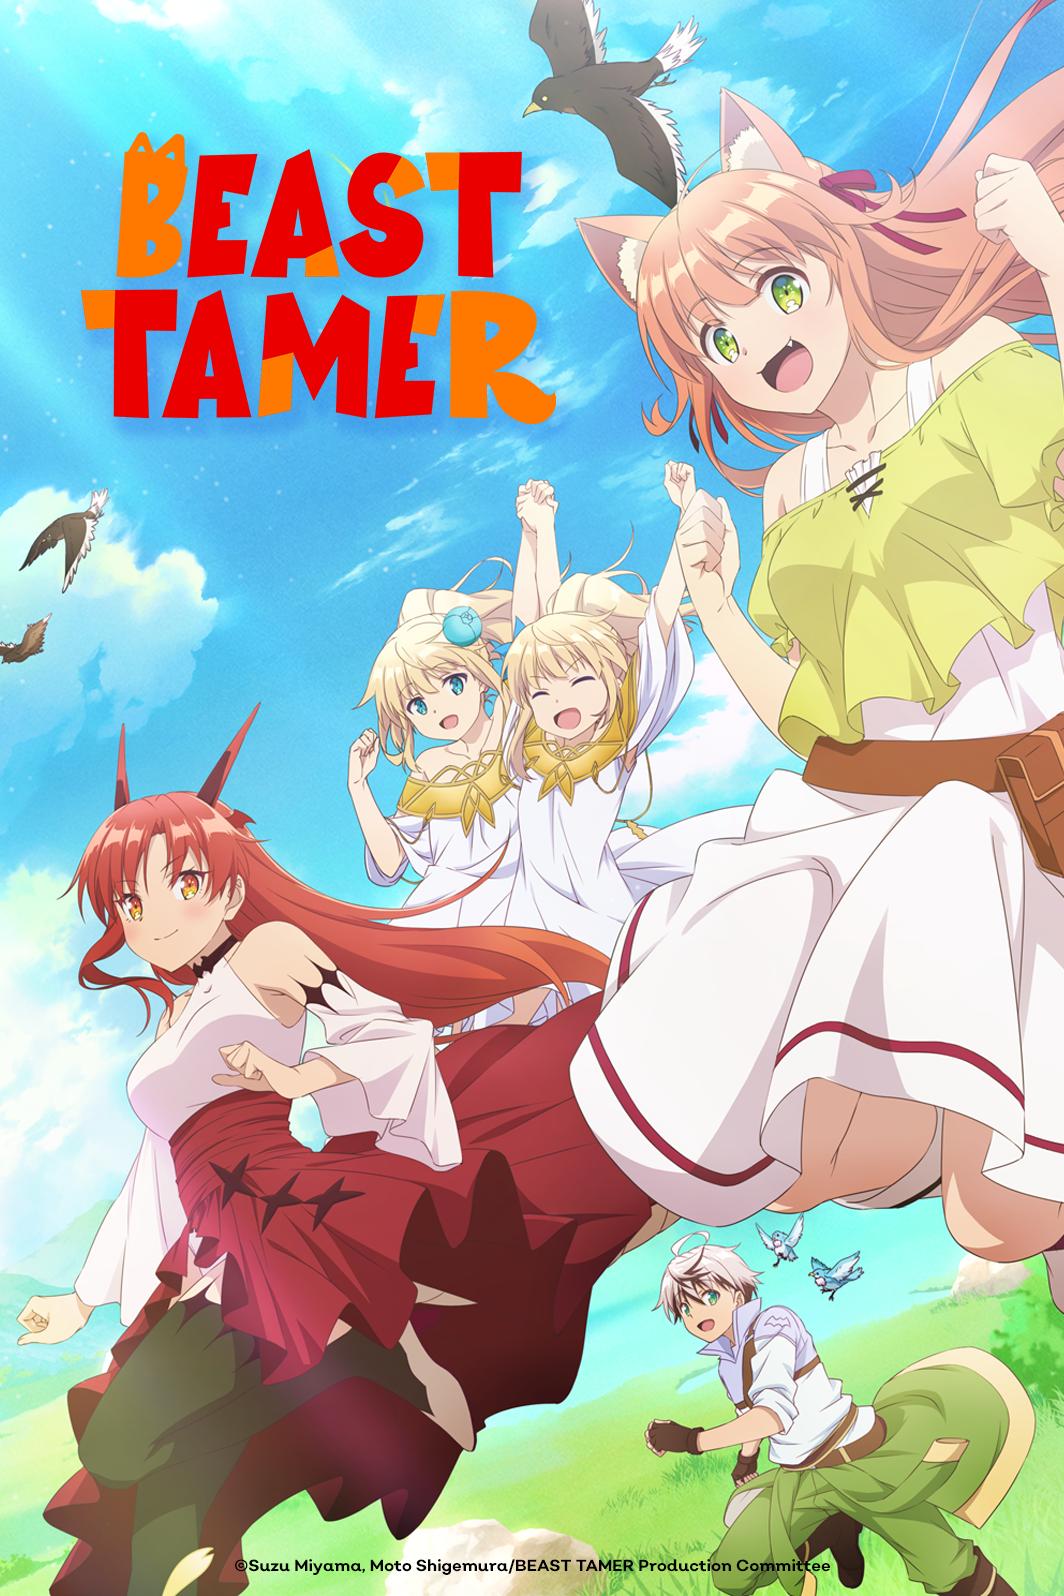 TV ratings for Beast Tamer (勇者パーティーを追放されたビーストテイマー、最強種の猫耳少女と出会う) in the United Kingdom. Tokyo MX TV series